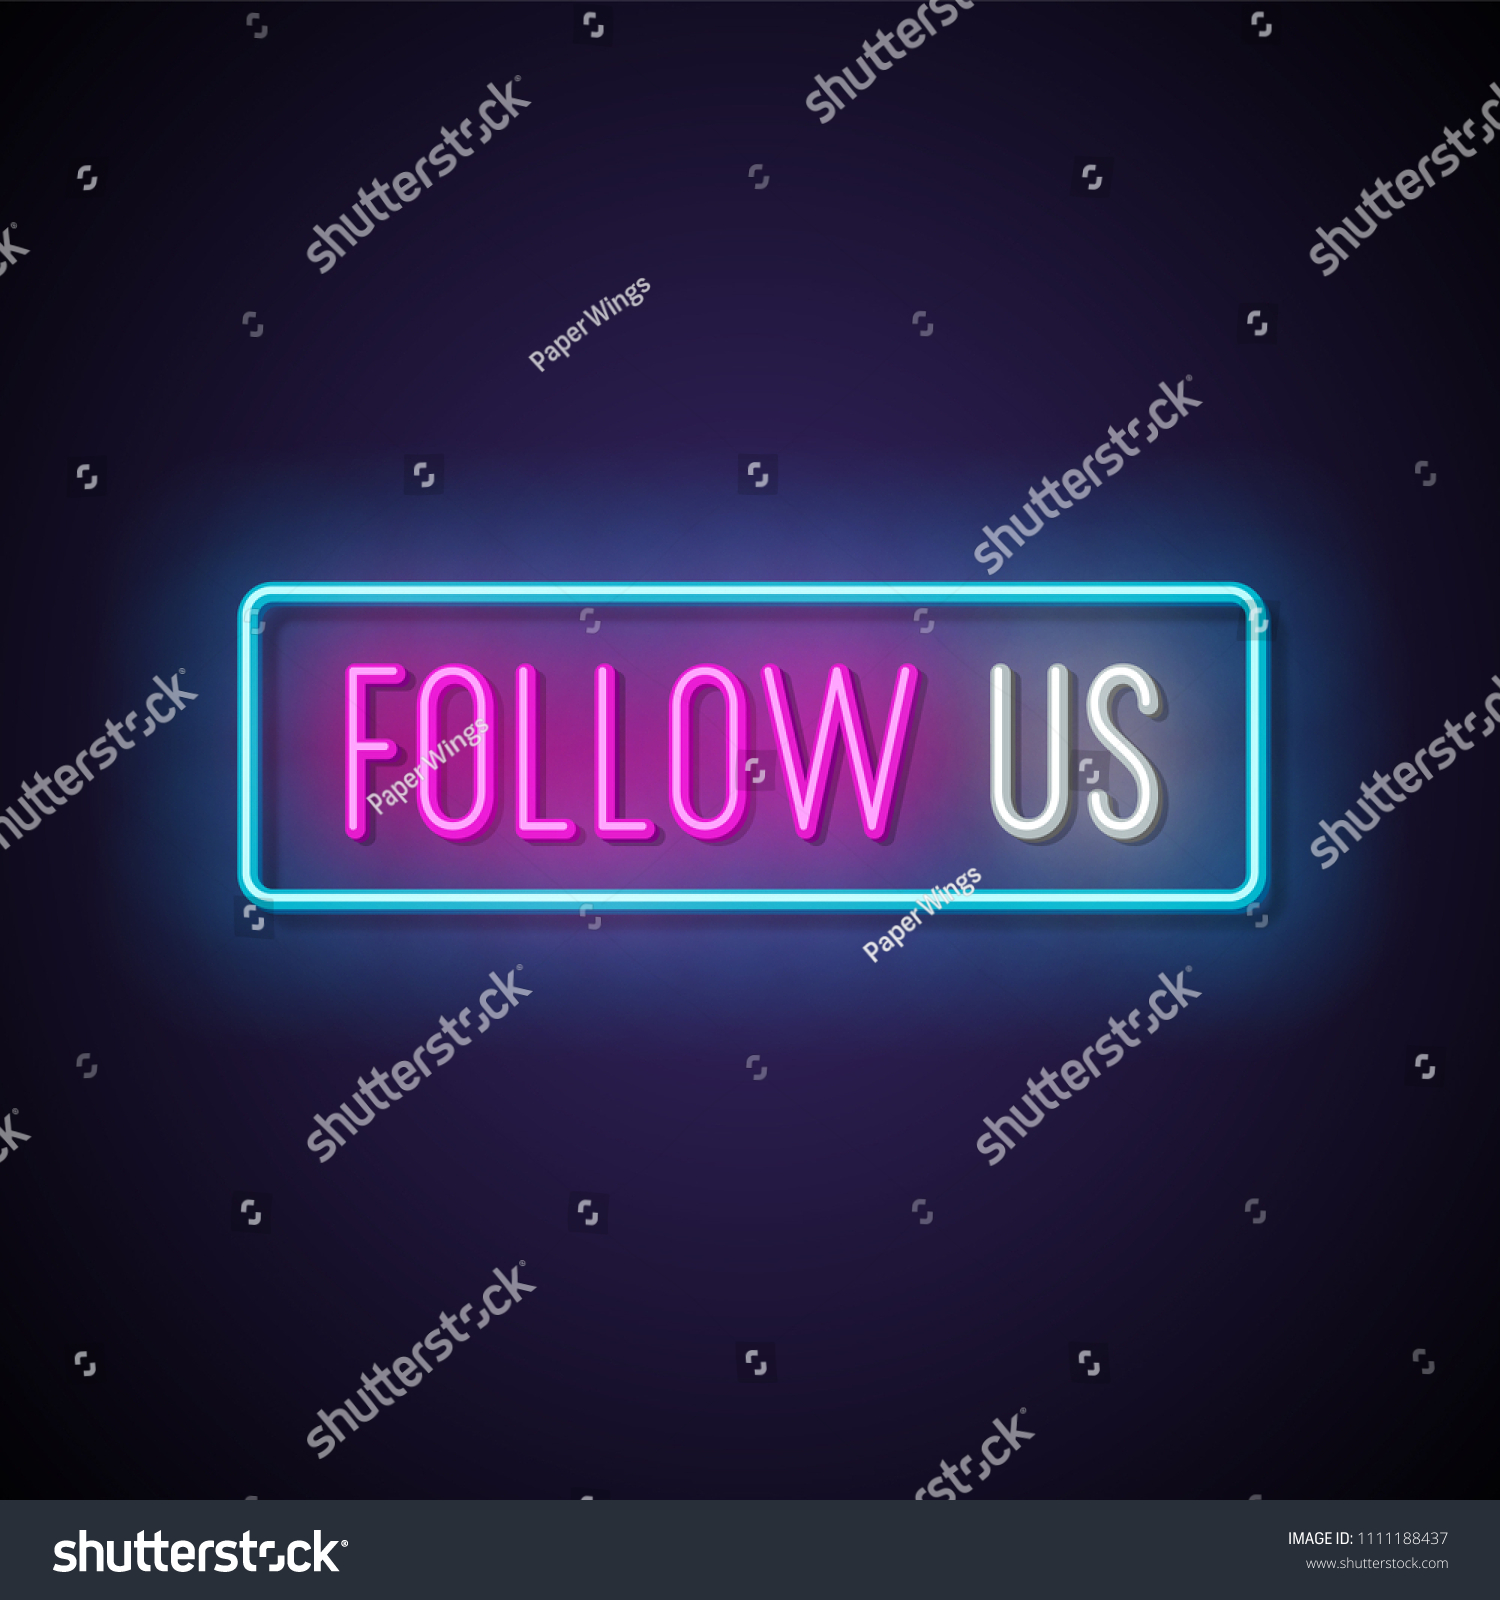 Follow Us Neon Signboard Vector Illustration Stock Vector (Royalty Free ...